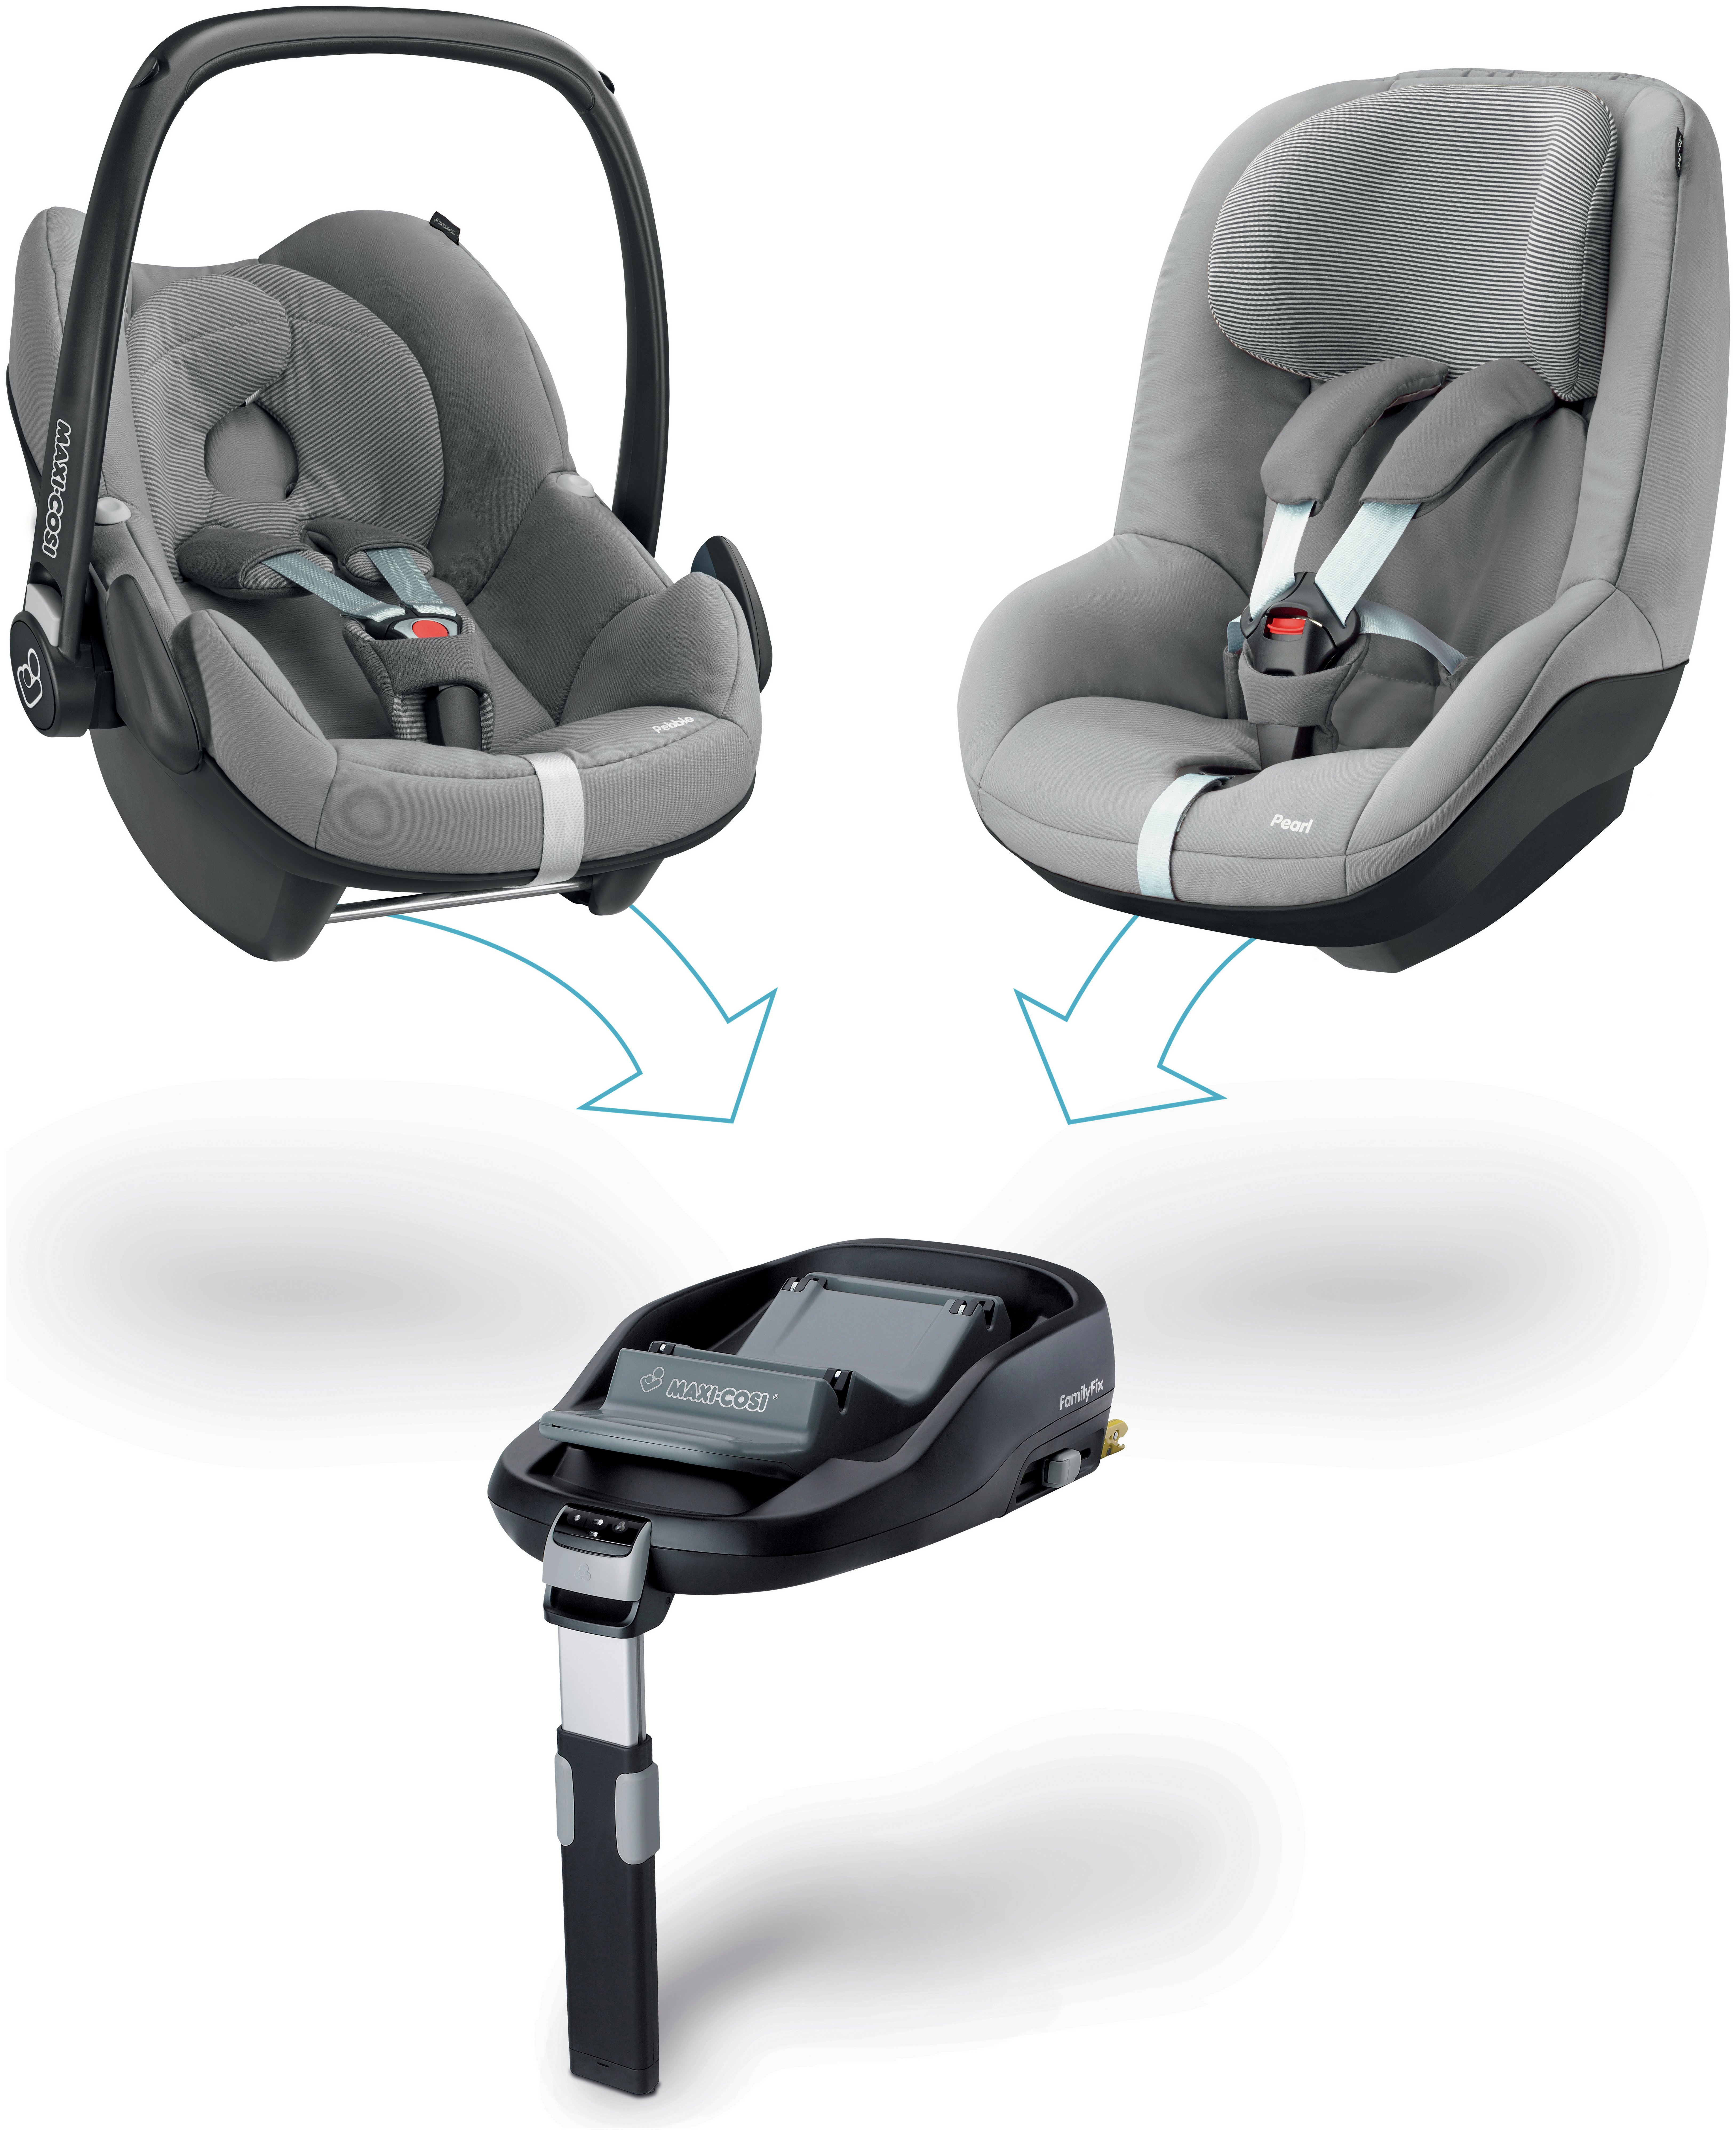 Maxi-Cosi Pebble Group 0+ Car Seat - Concrete Grey. Reviews